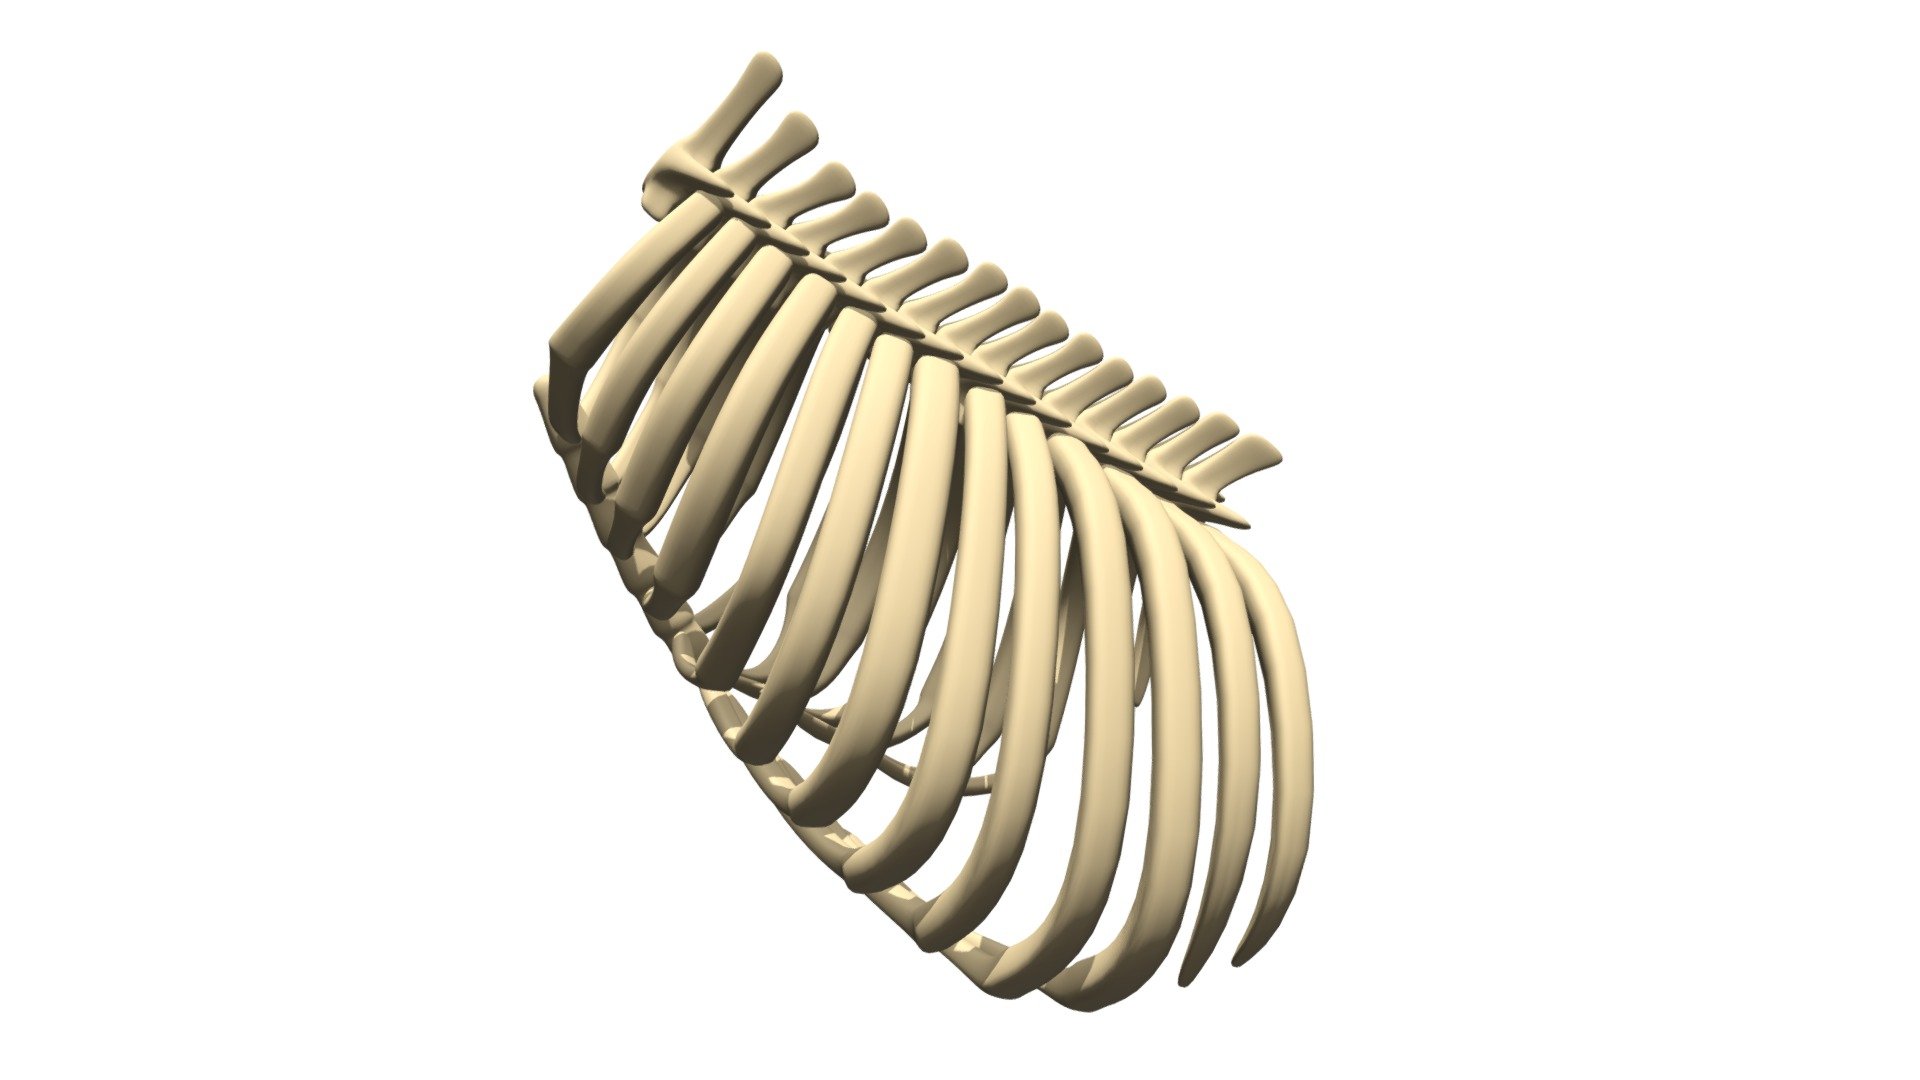 Detailed 3d model of animal rib cage 3d model